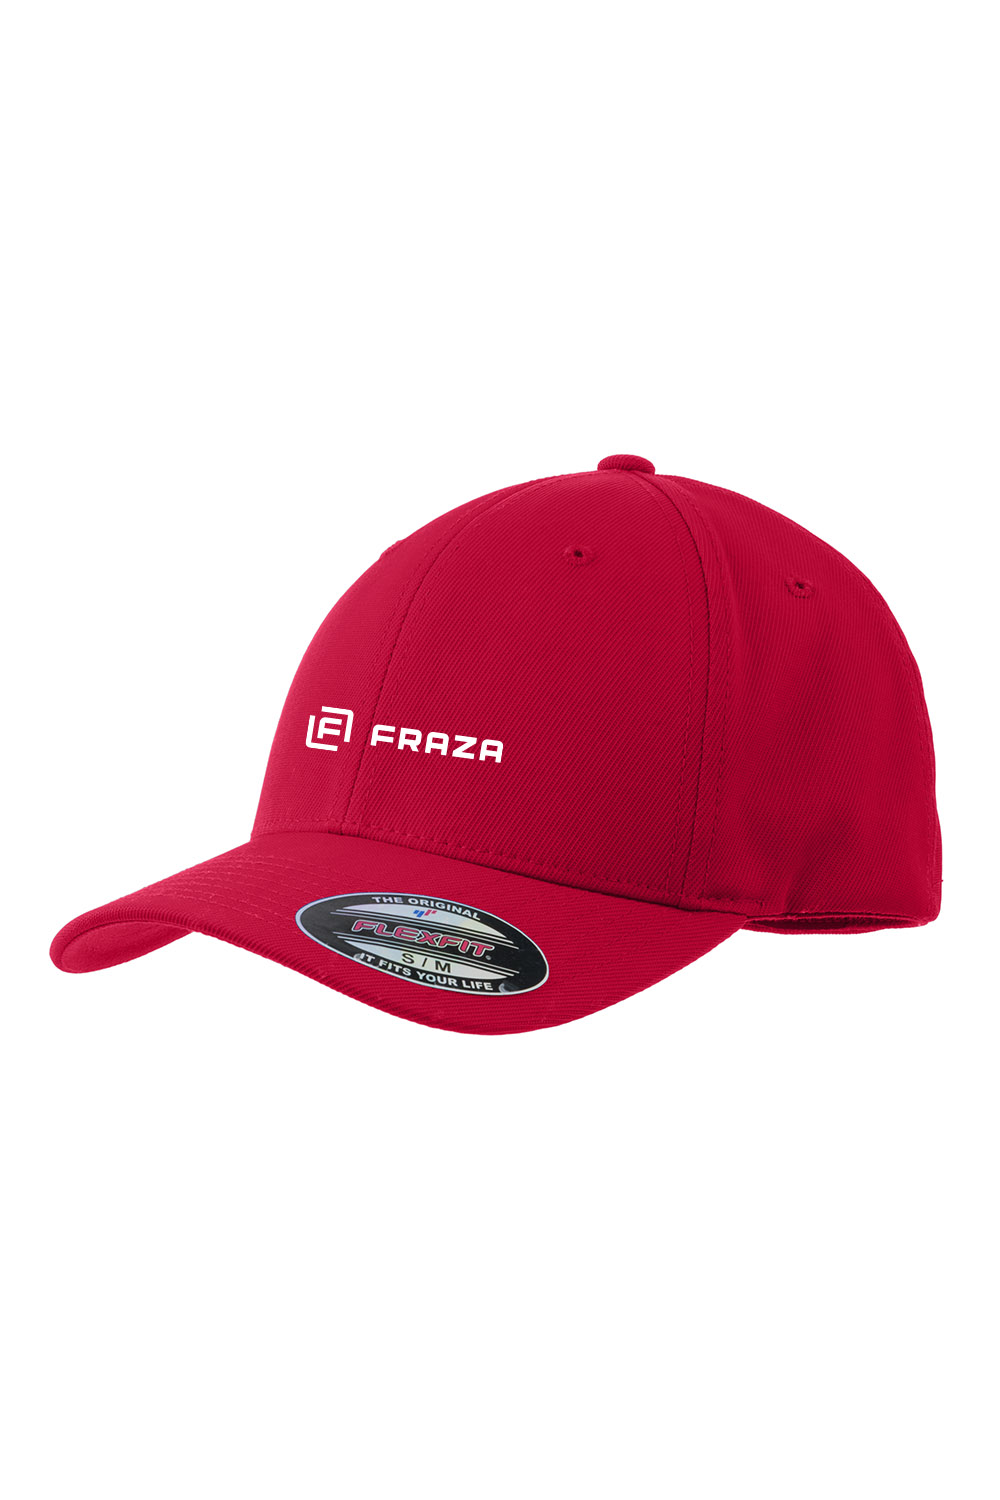 Sport-Tek® Flexfit® Performance Solid Cap - Fraza Company Store